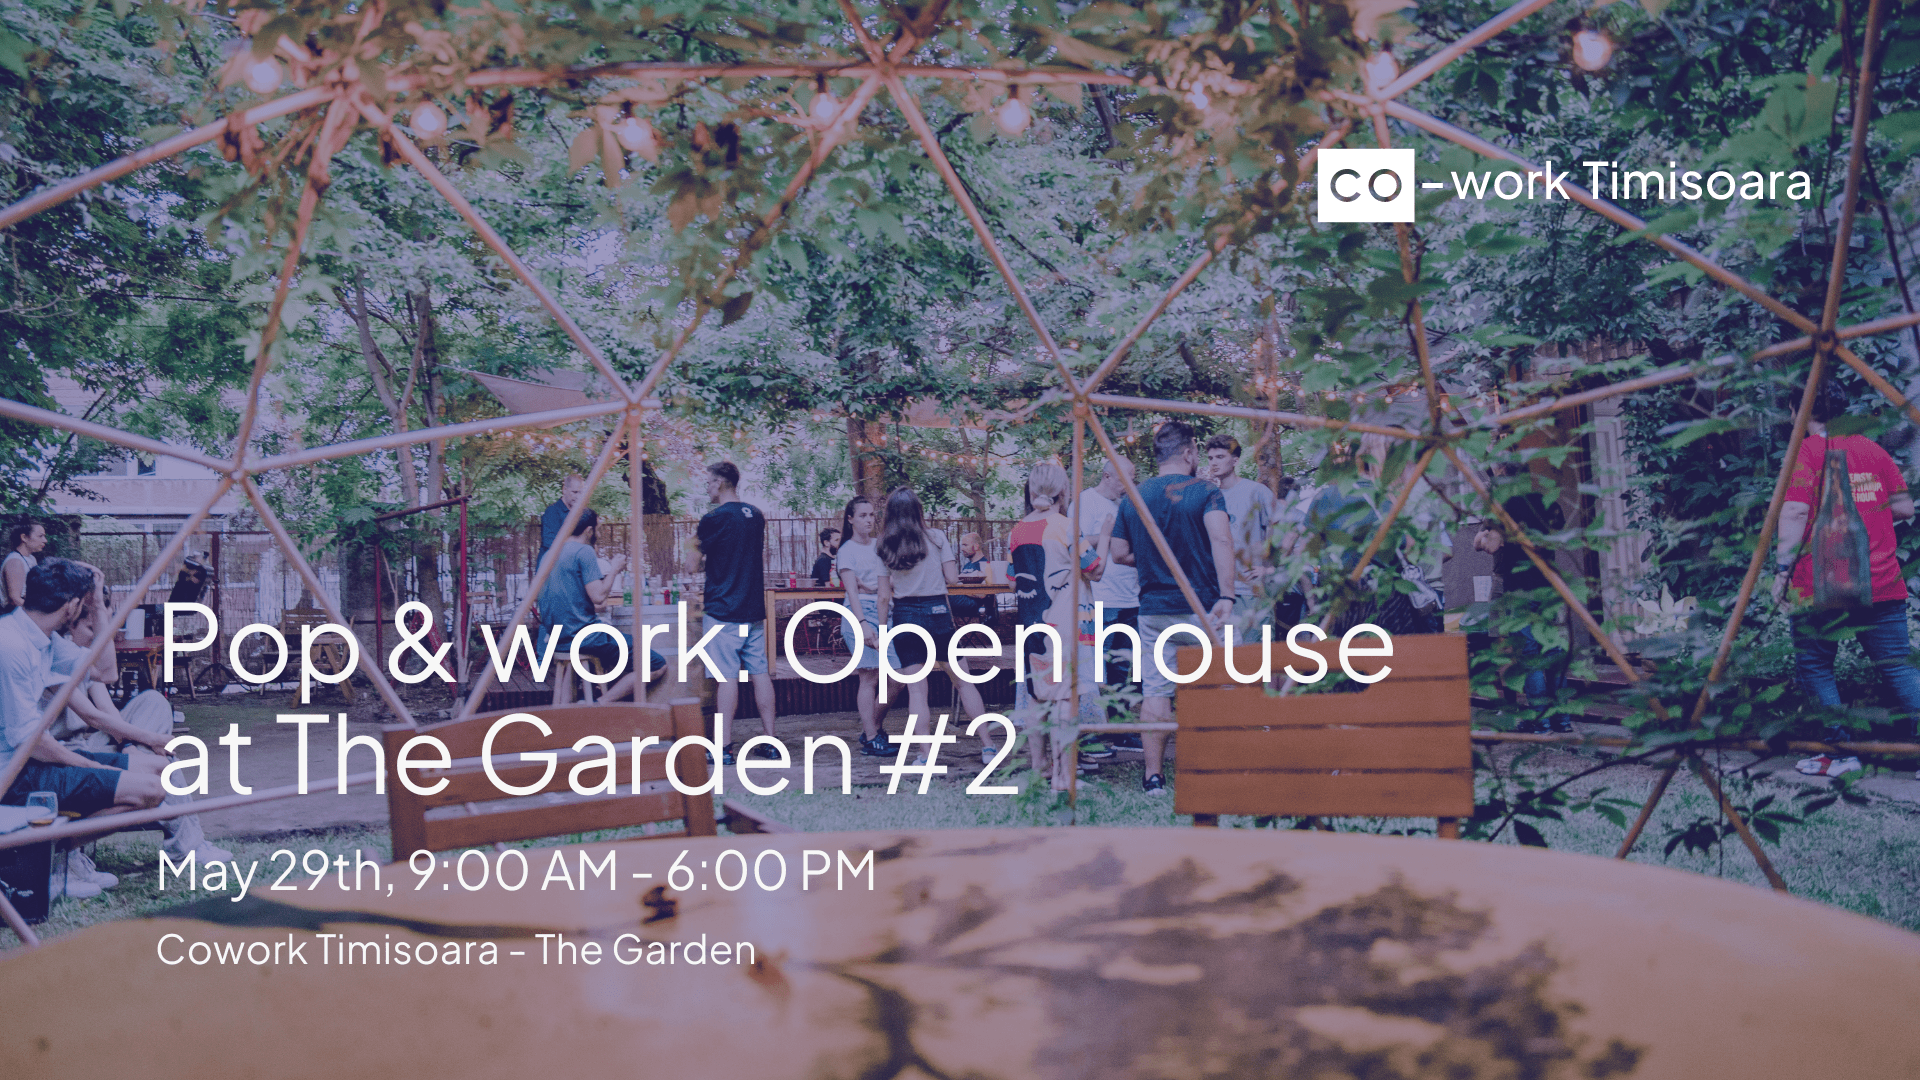 Pop & work: Open house at The Garden #2